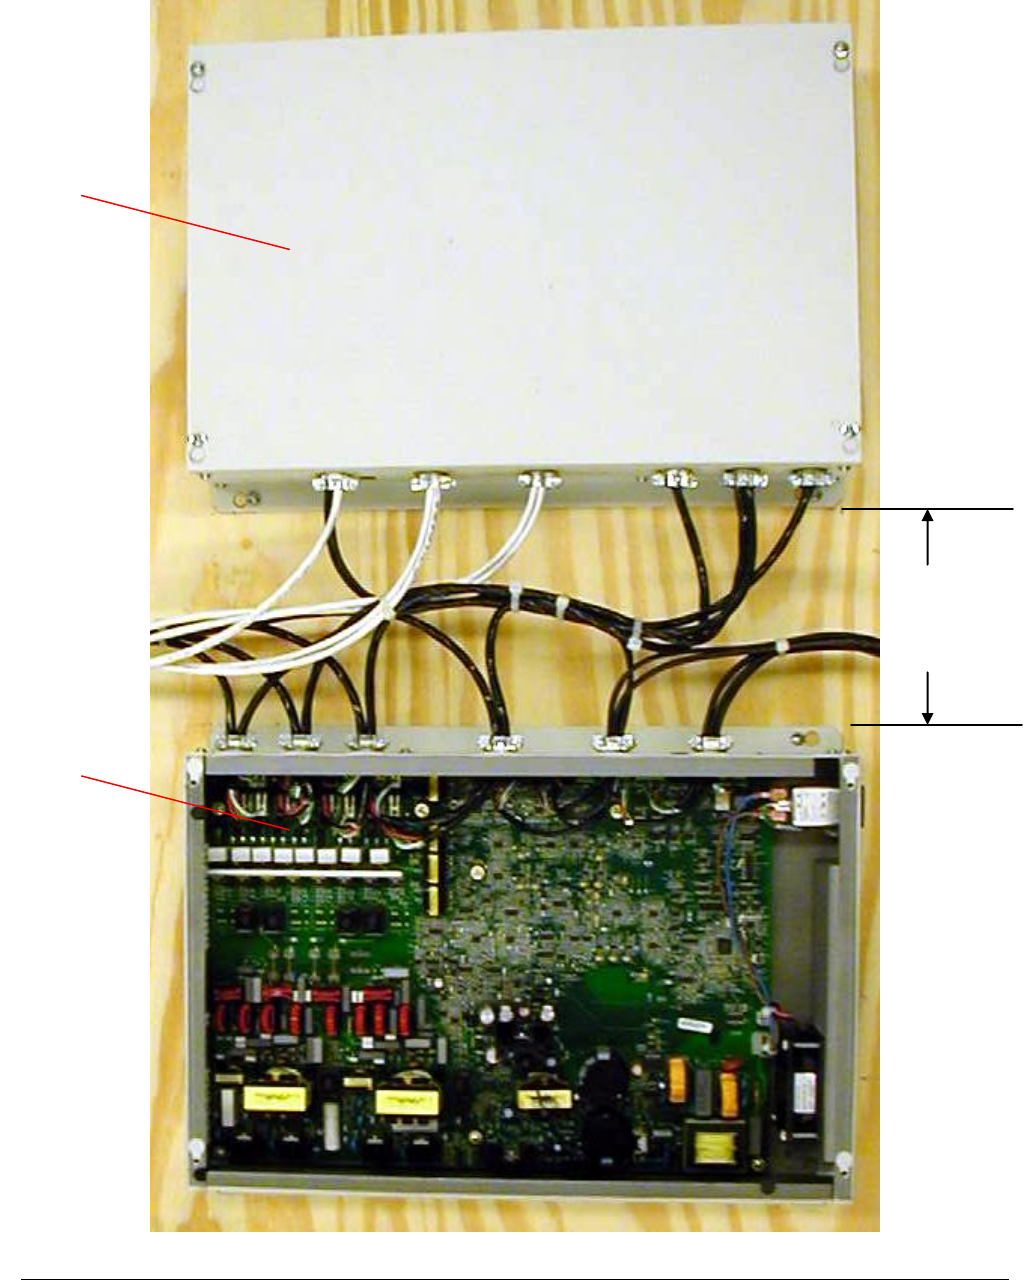 New Sensormatic 7.5ft 3 Prong Power Cable 125V 10A 18/3 USA-IEC 320 0351-0547-01 